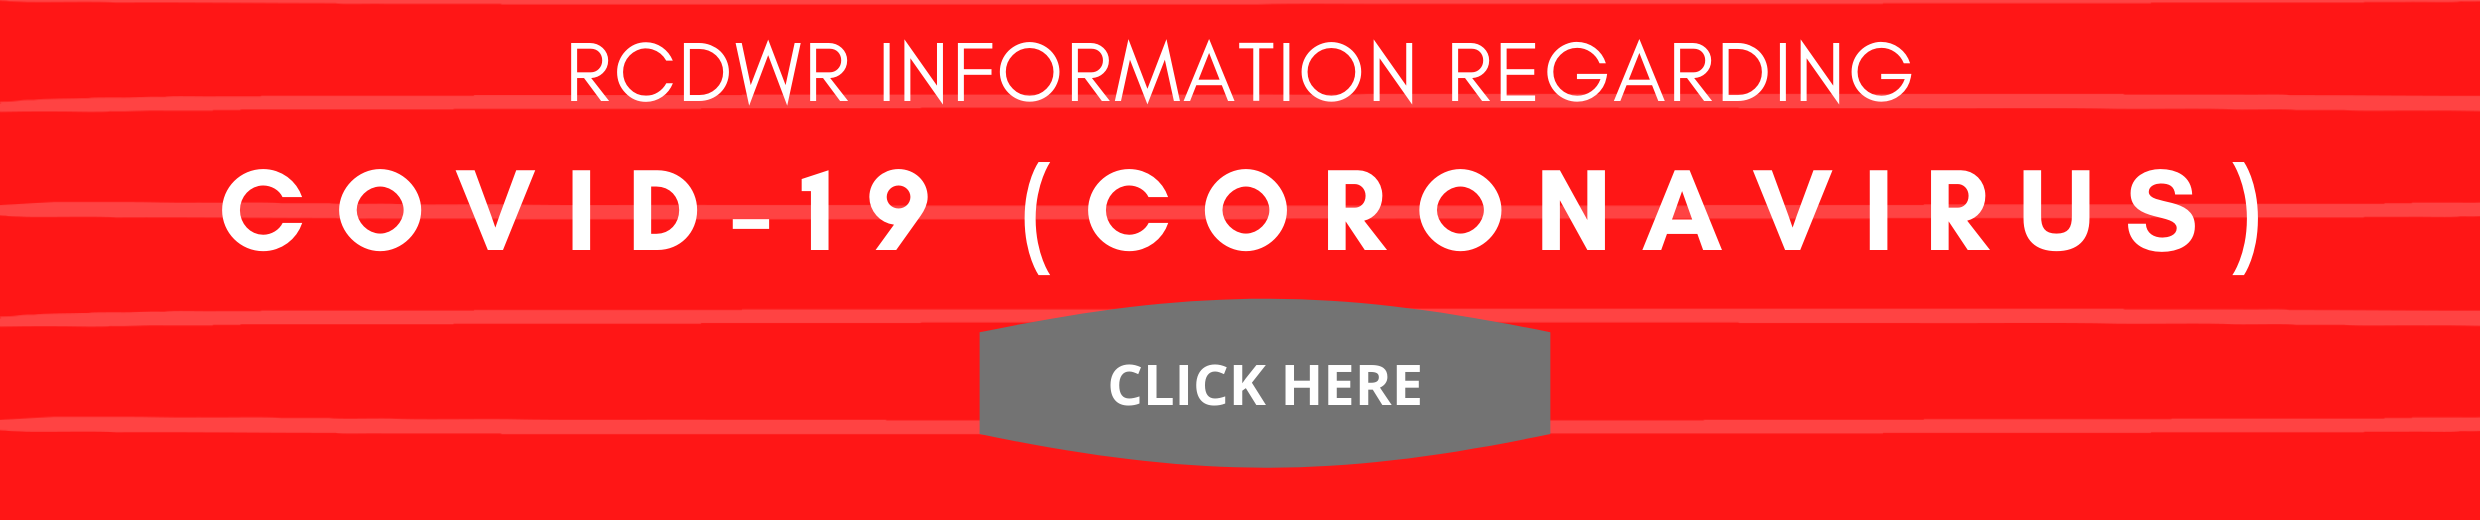 RCDWR Information Regarding COVID-19